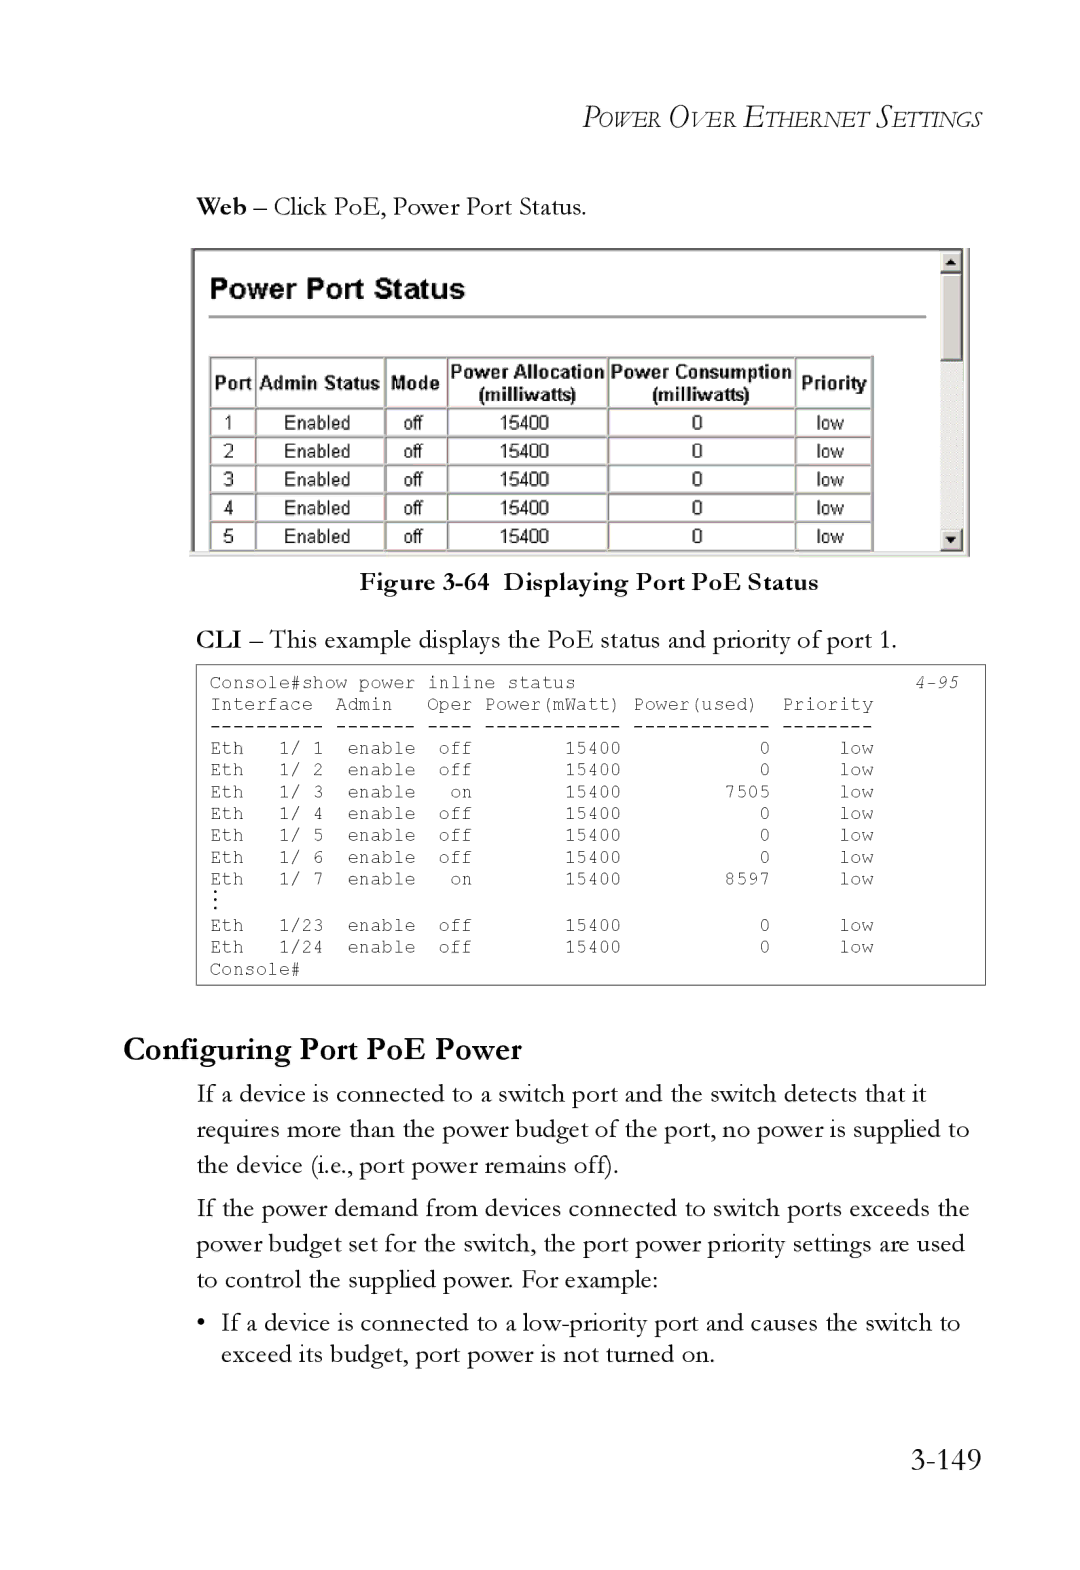 SMC Networks SMC6824M manual Configuring Port PoE Power, 149, Web Click PoE, Power Port Status 